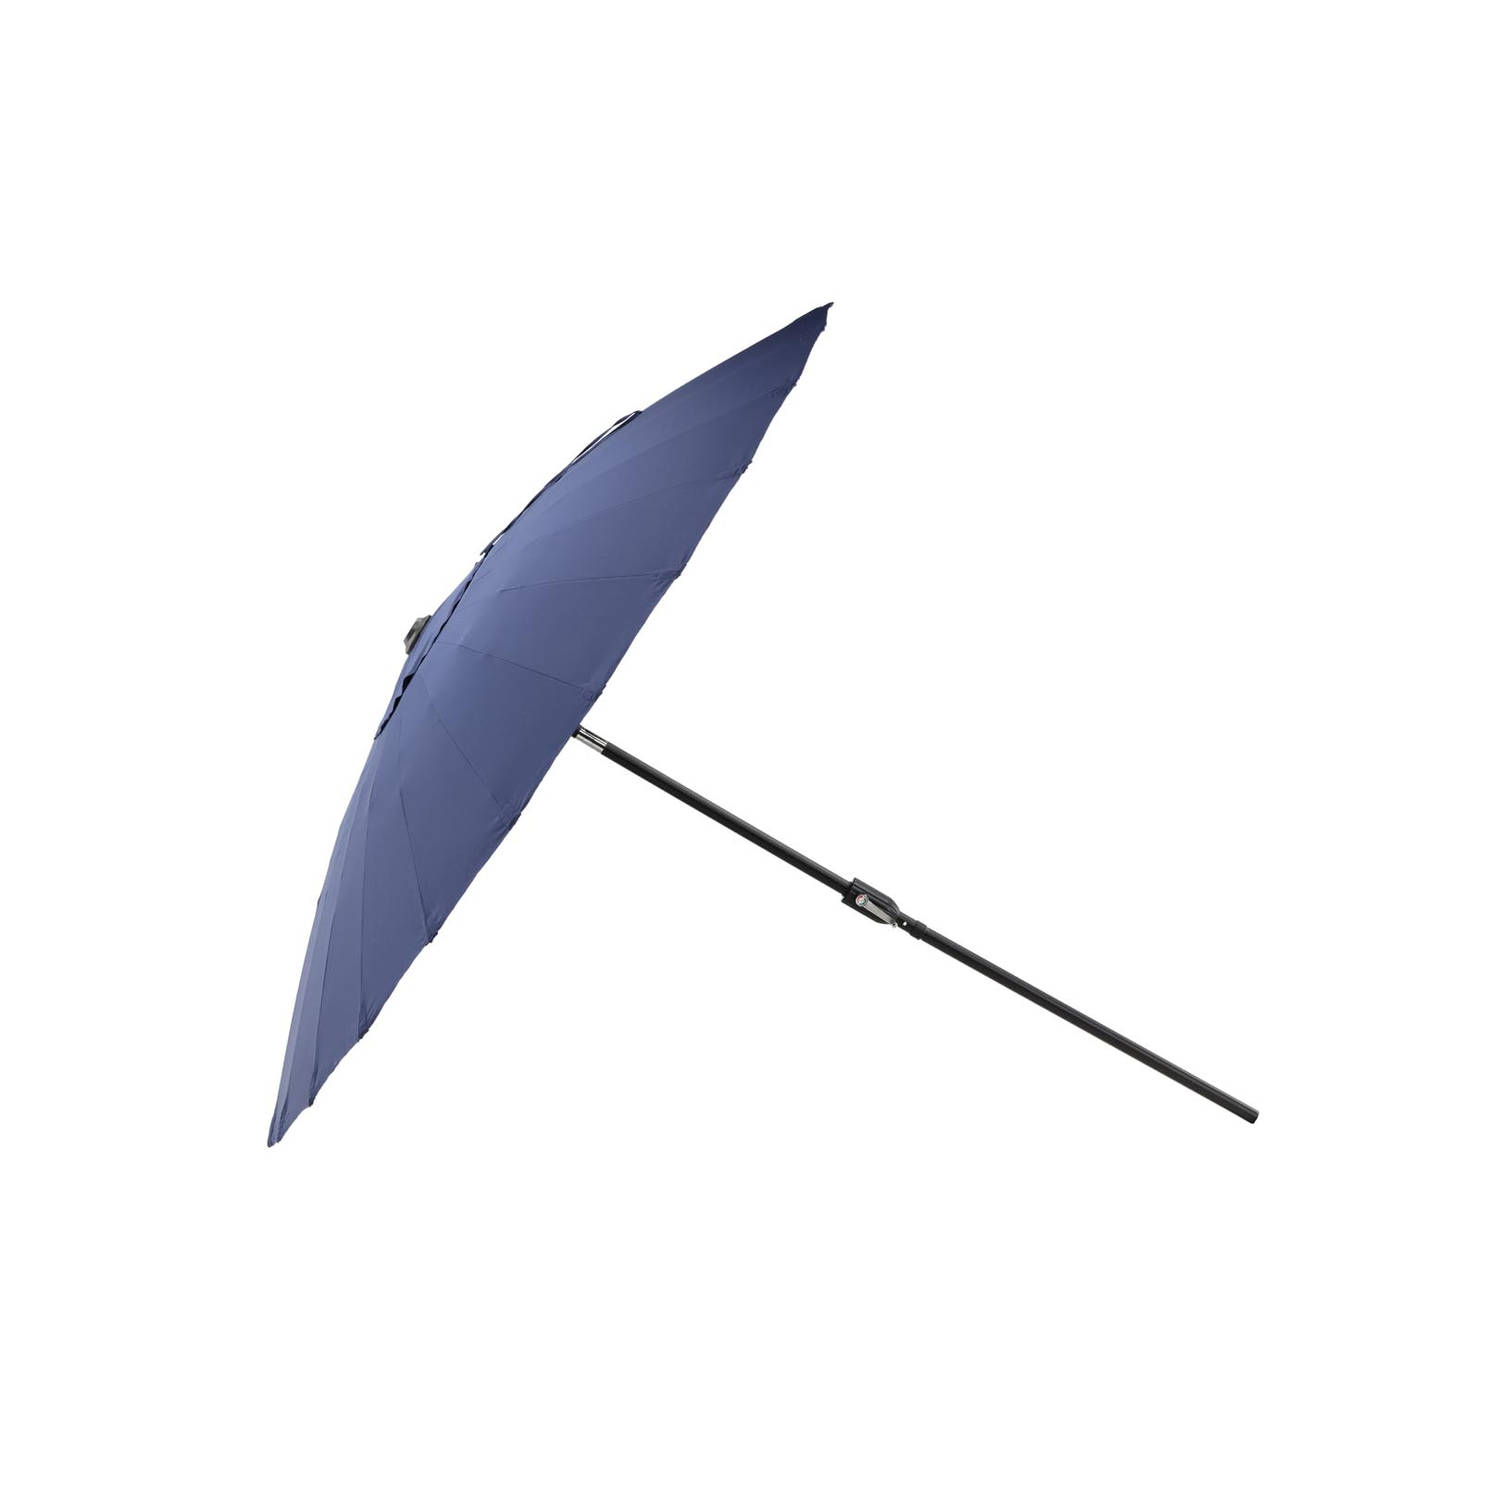 Palmetto parasol met kantelfunctie blauw.